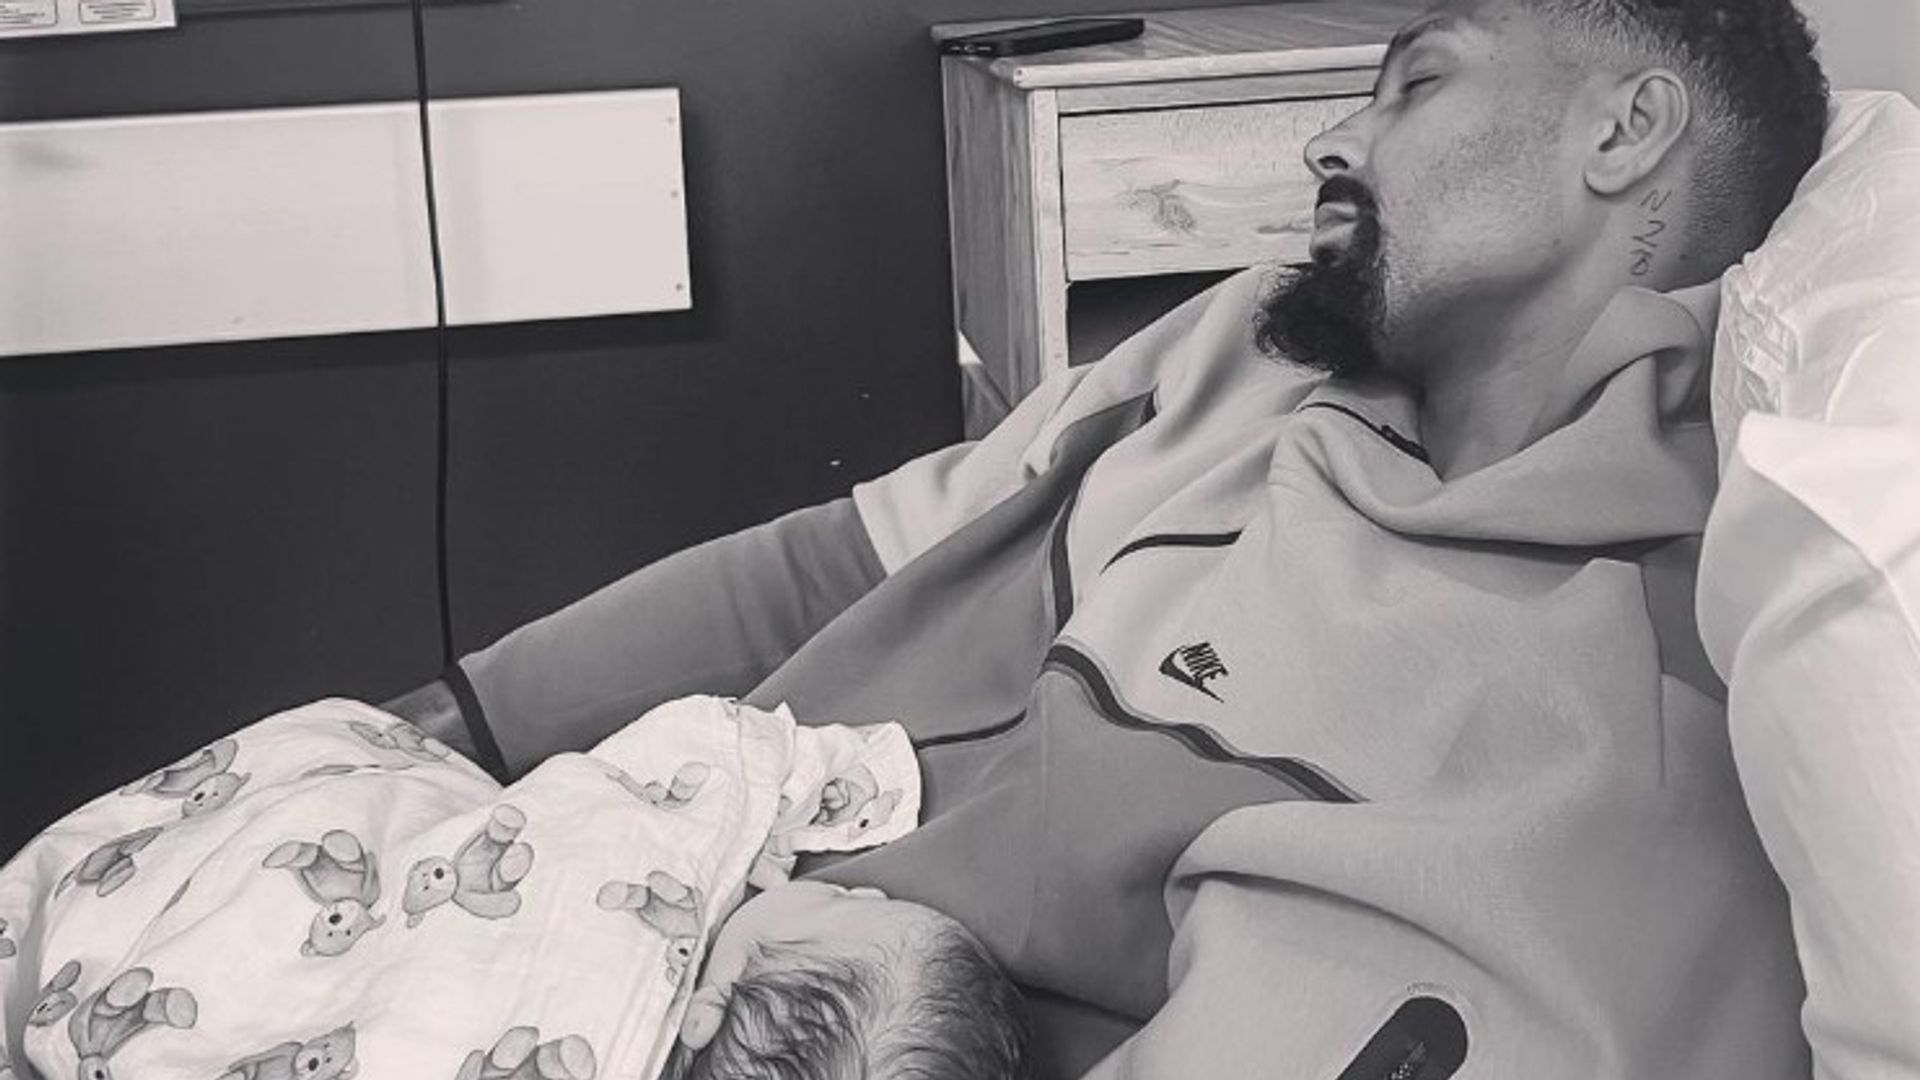 Diversity's Jordan Banjo breaks silence on baby son's hospital dash: 'Been a scary few days'